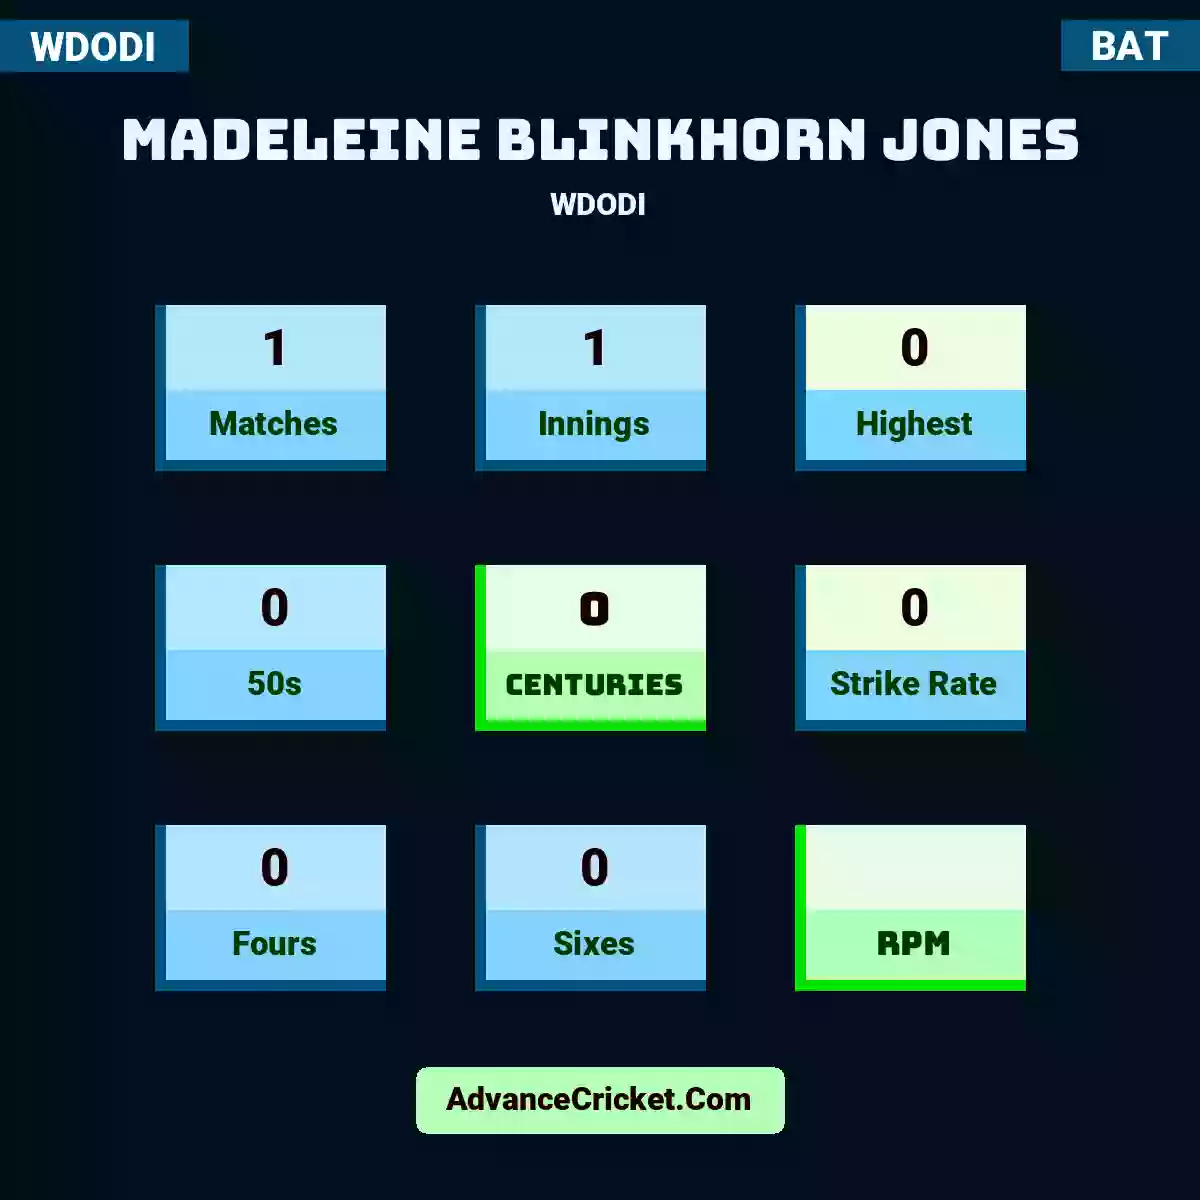 Madeleine Blinkhorn Jones WDODI , Madeleine Blinkhorn Jones played 1 matches, scored 0 runs as highest, 0 half-centuries, and 0 centuries, with a strike rate of 0. M.Blinkhorn-Jones hit 0 fours and 0 sixes.